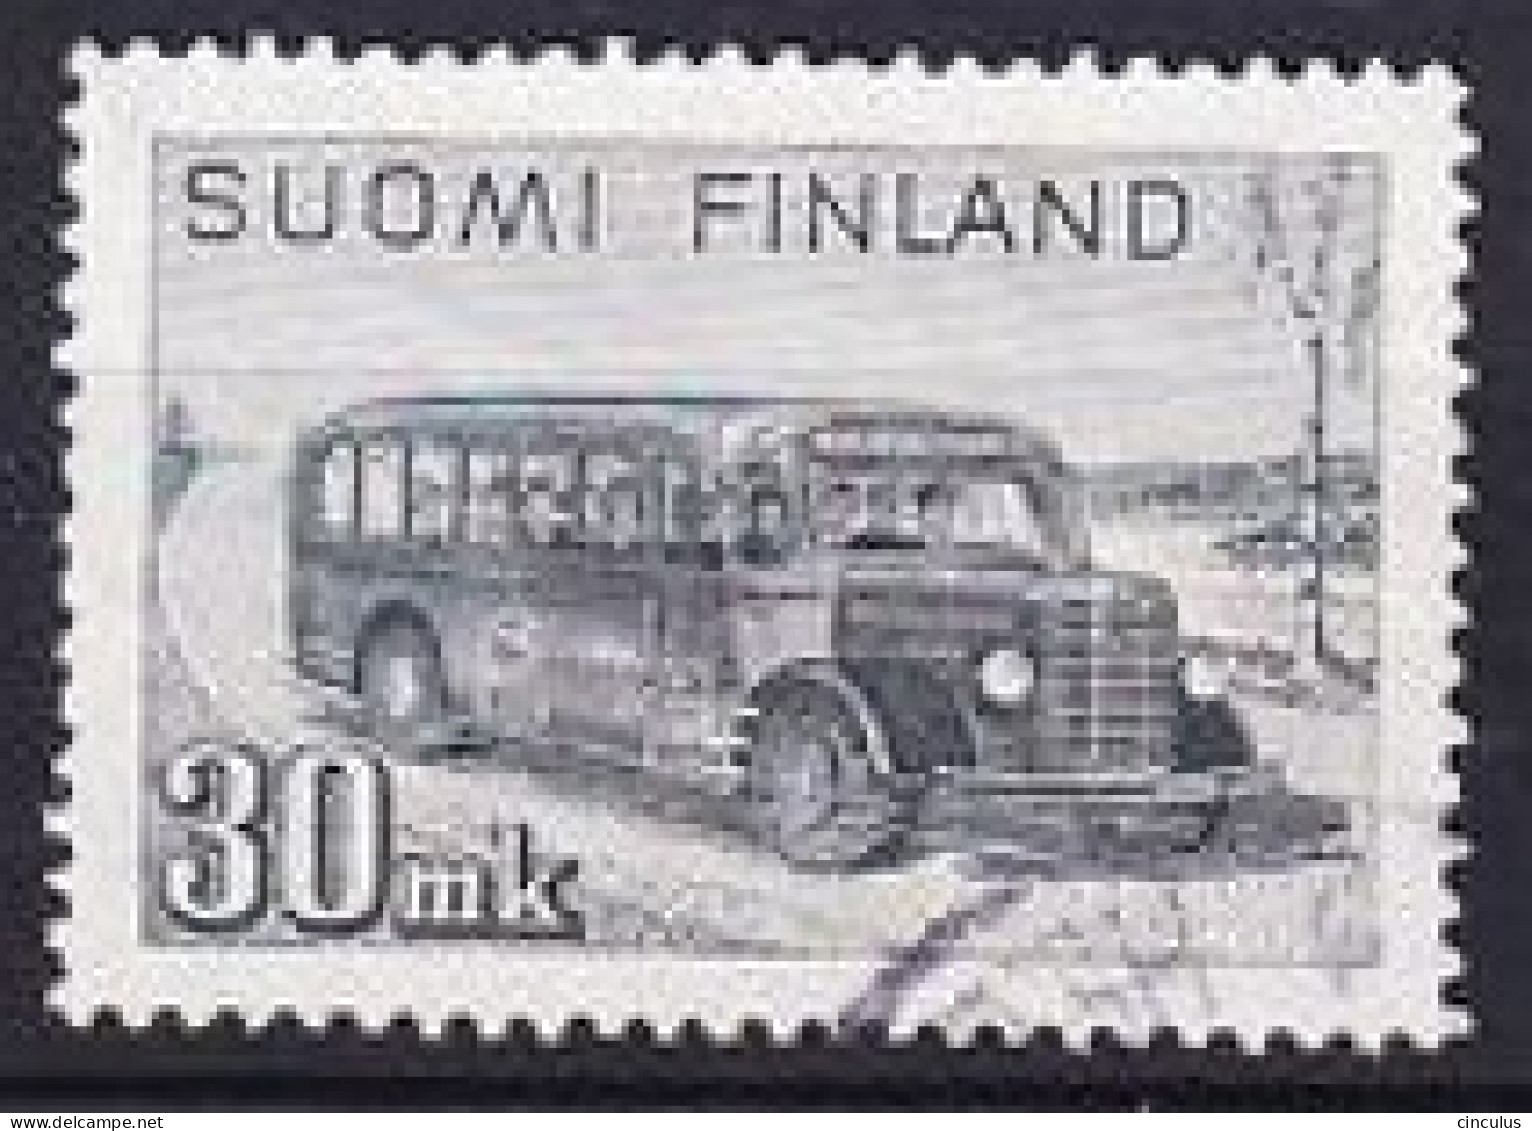 1946. Finland. Post And Travel Coach. 30 M. Used. Mi. Nr. 330 - Gebraucht